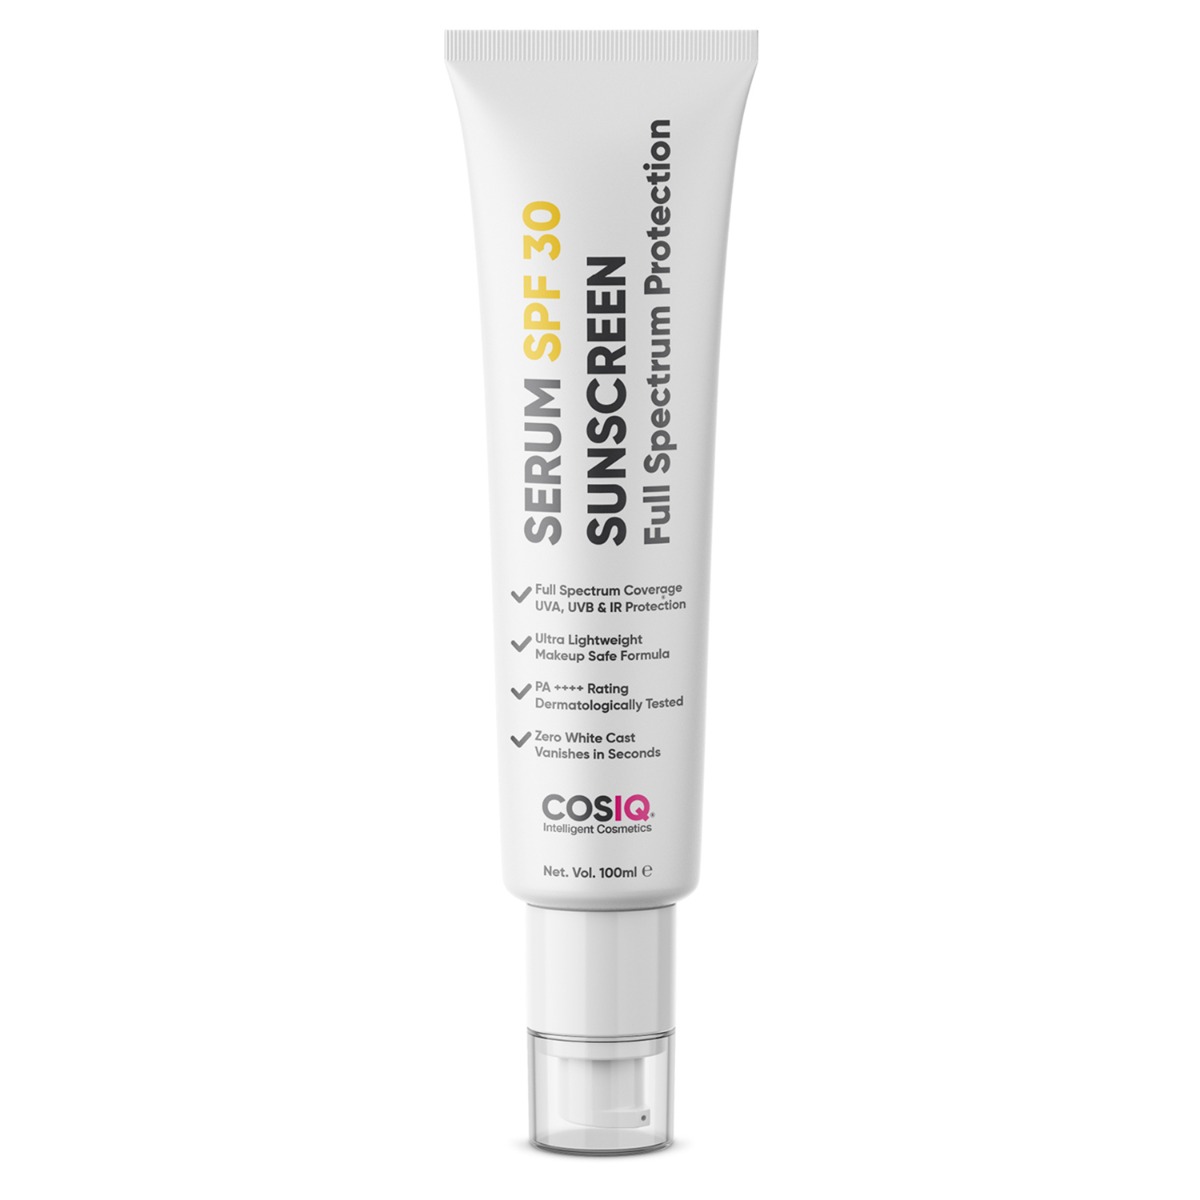 Cos-IQ® Daily Use Sunscreen Serum SPF 30 PA++++ Broad Spectrum, 100ml